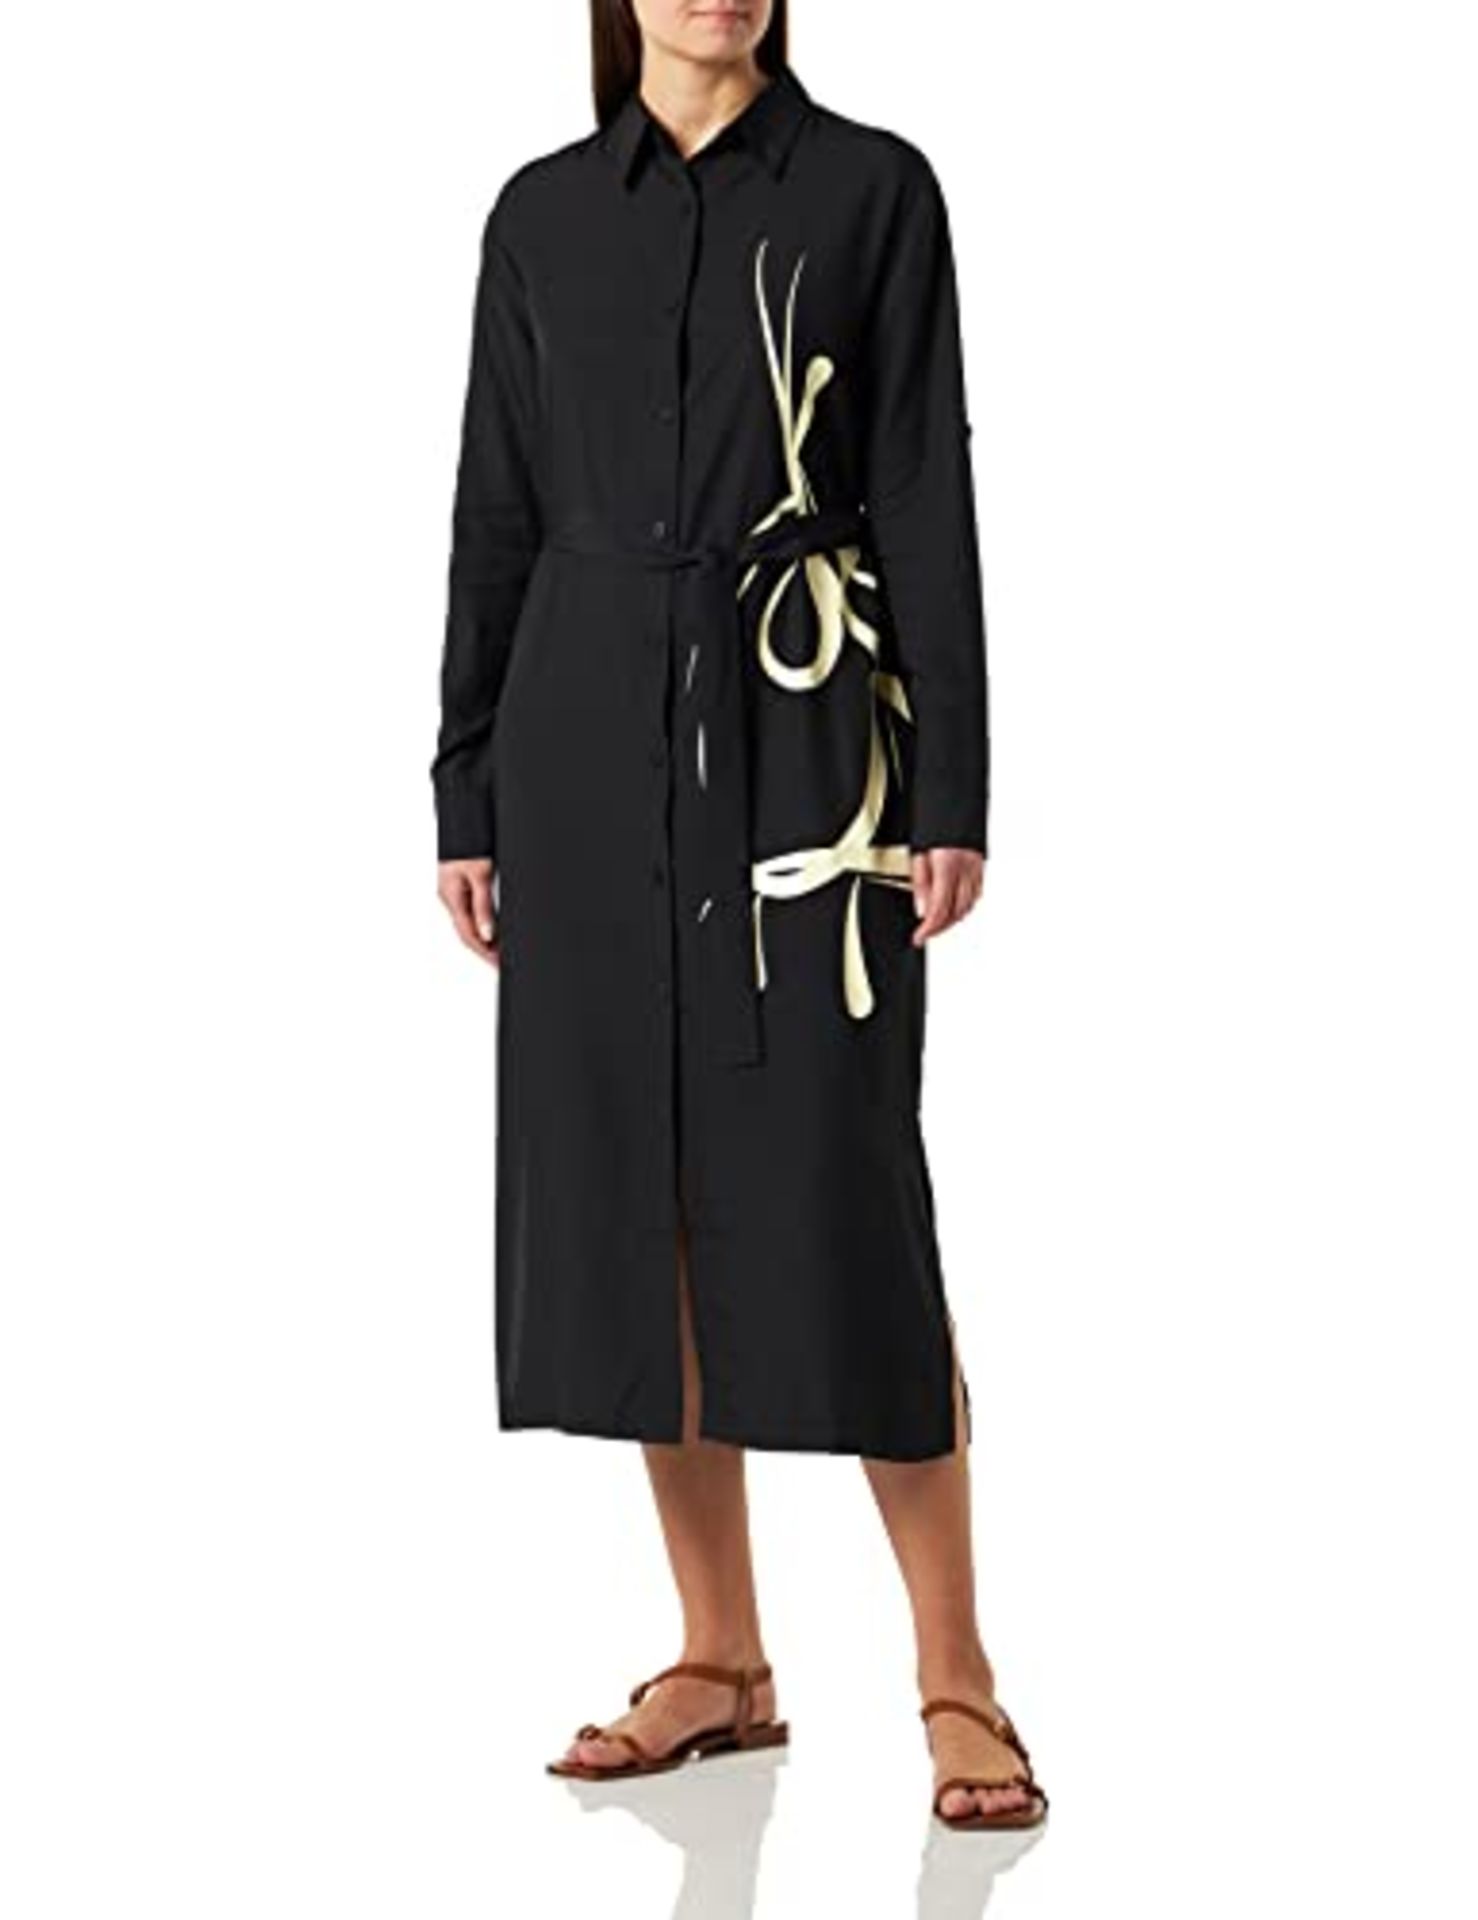 RRP £62.00 Triumph Women's Thermal MyWear Maxi Dress Bathrobe, Black Combination, Size 38